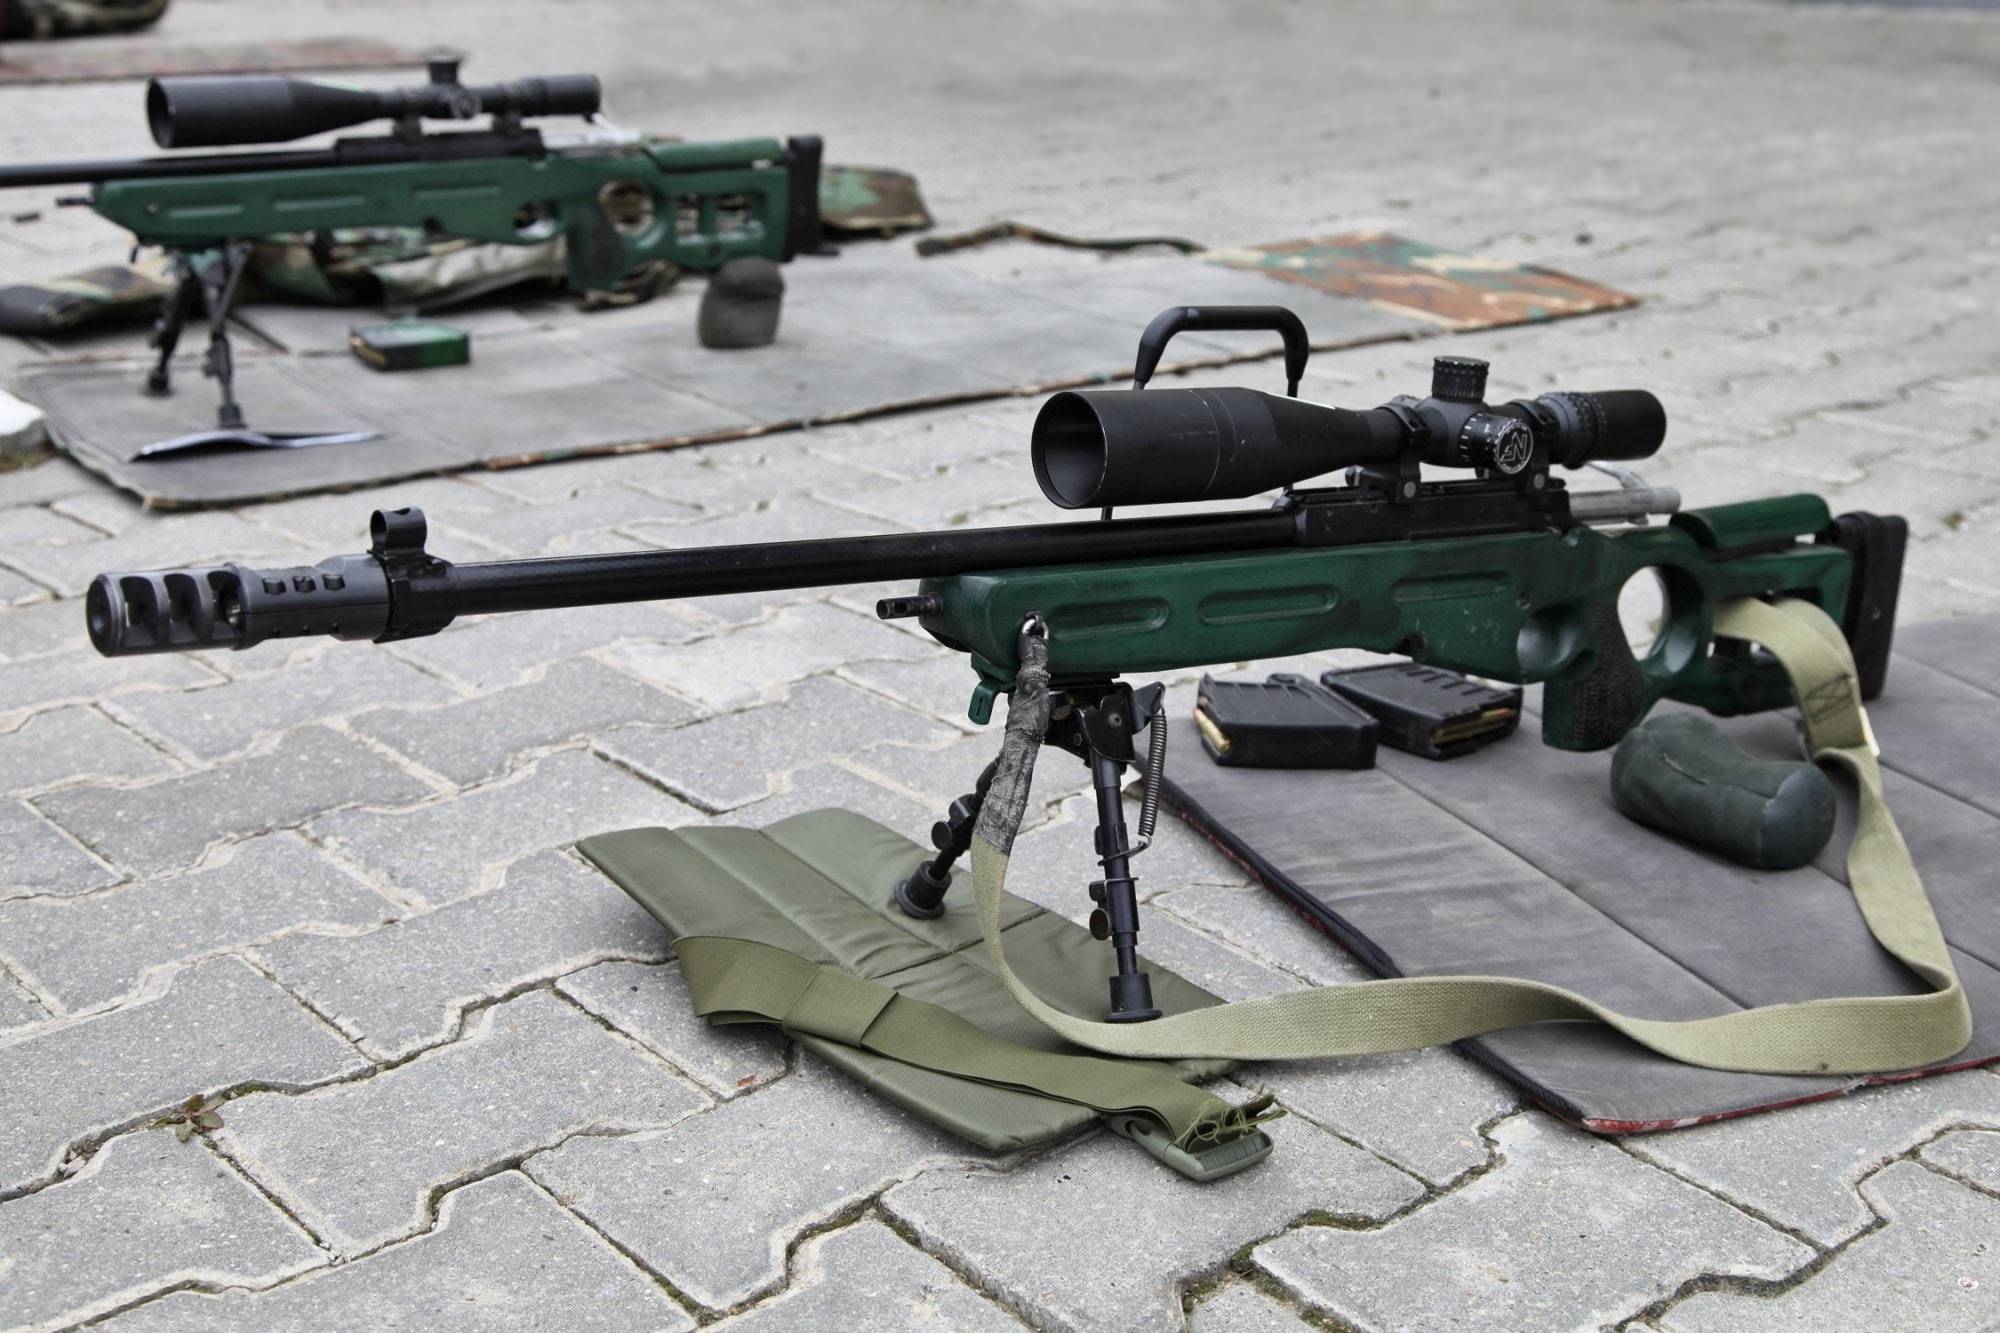 Alex-338 снайперская винтовка — характеристики, фото, ттх